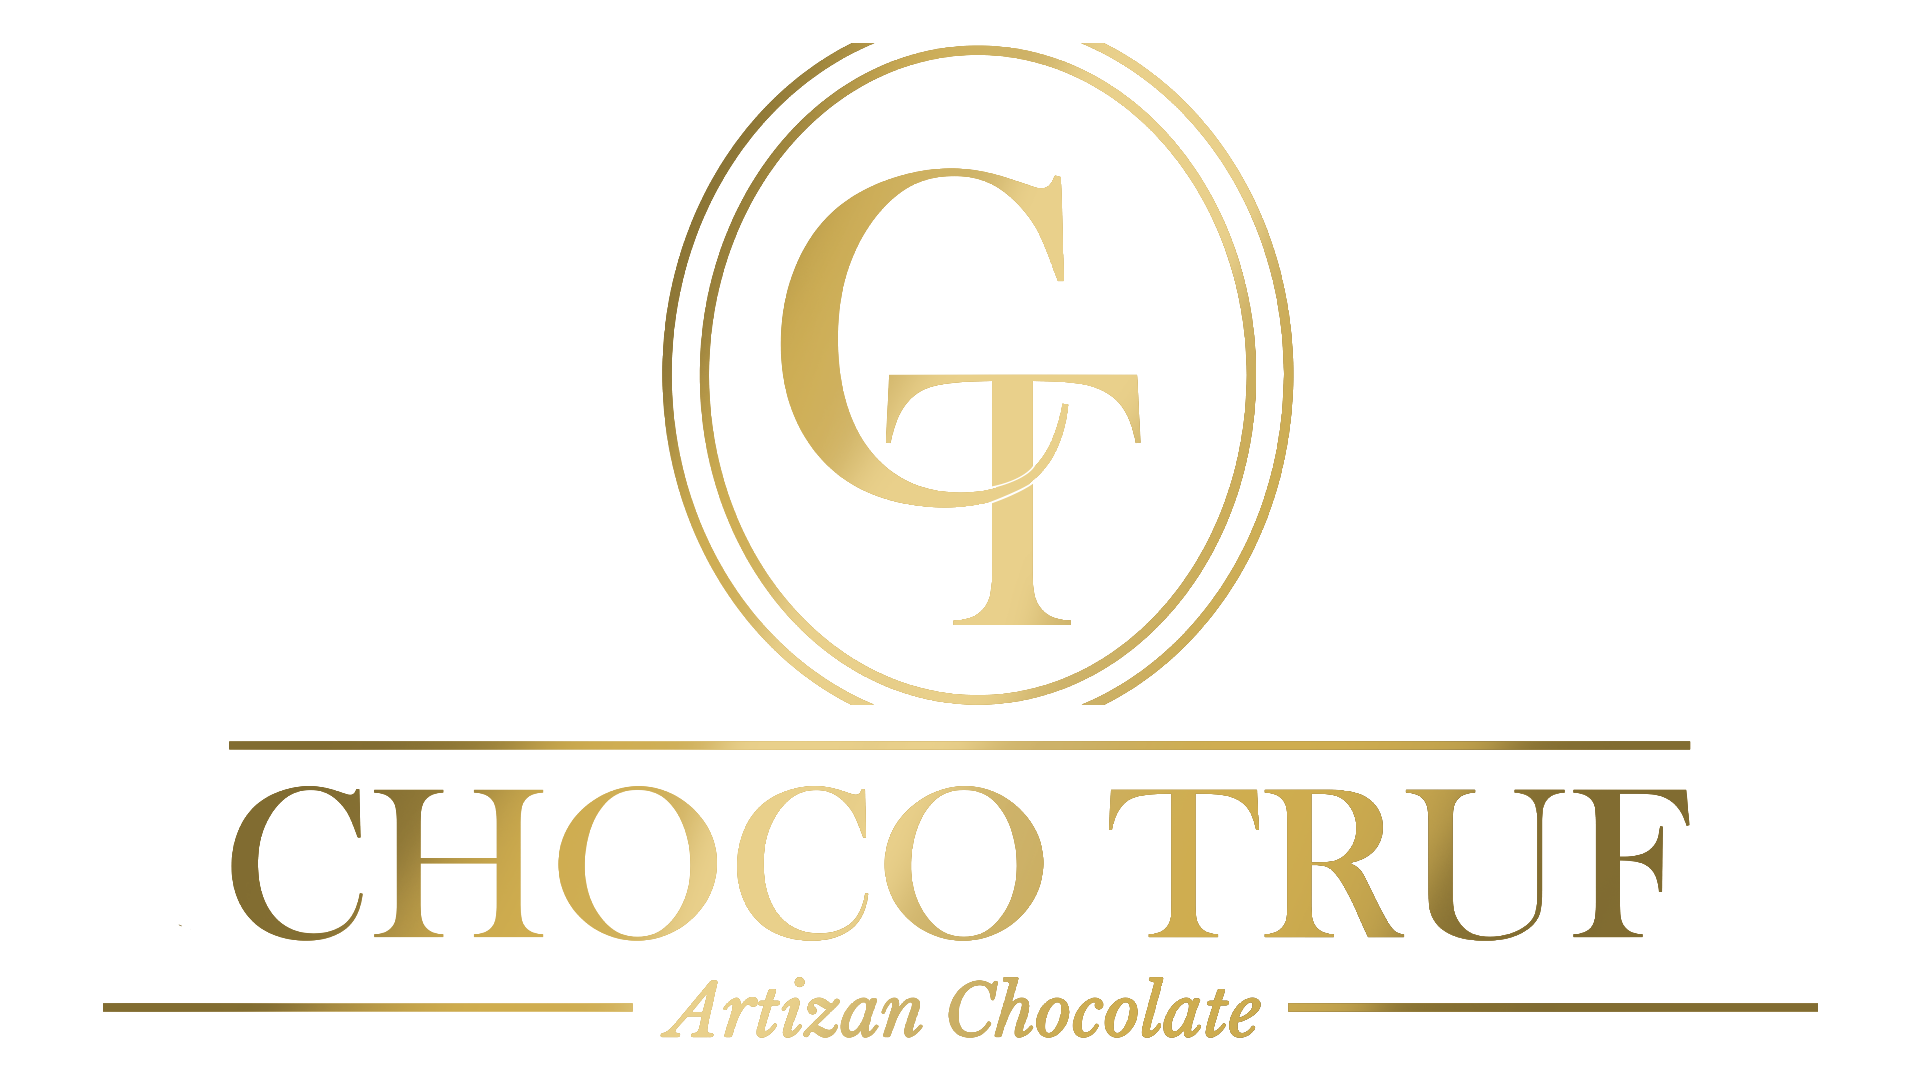 Choco Truf